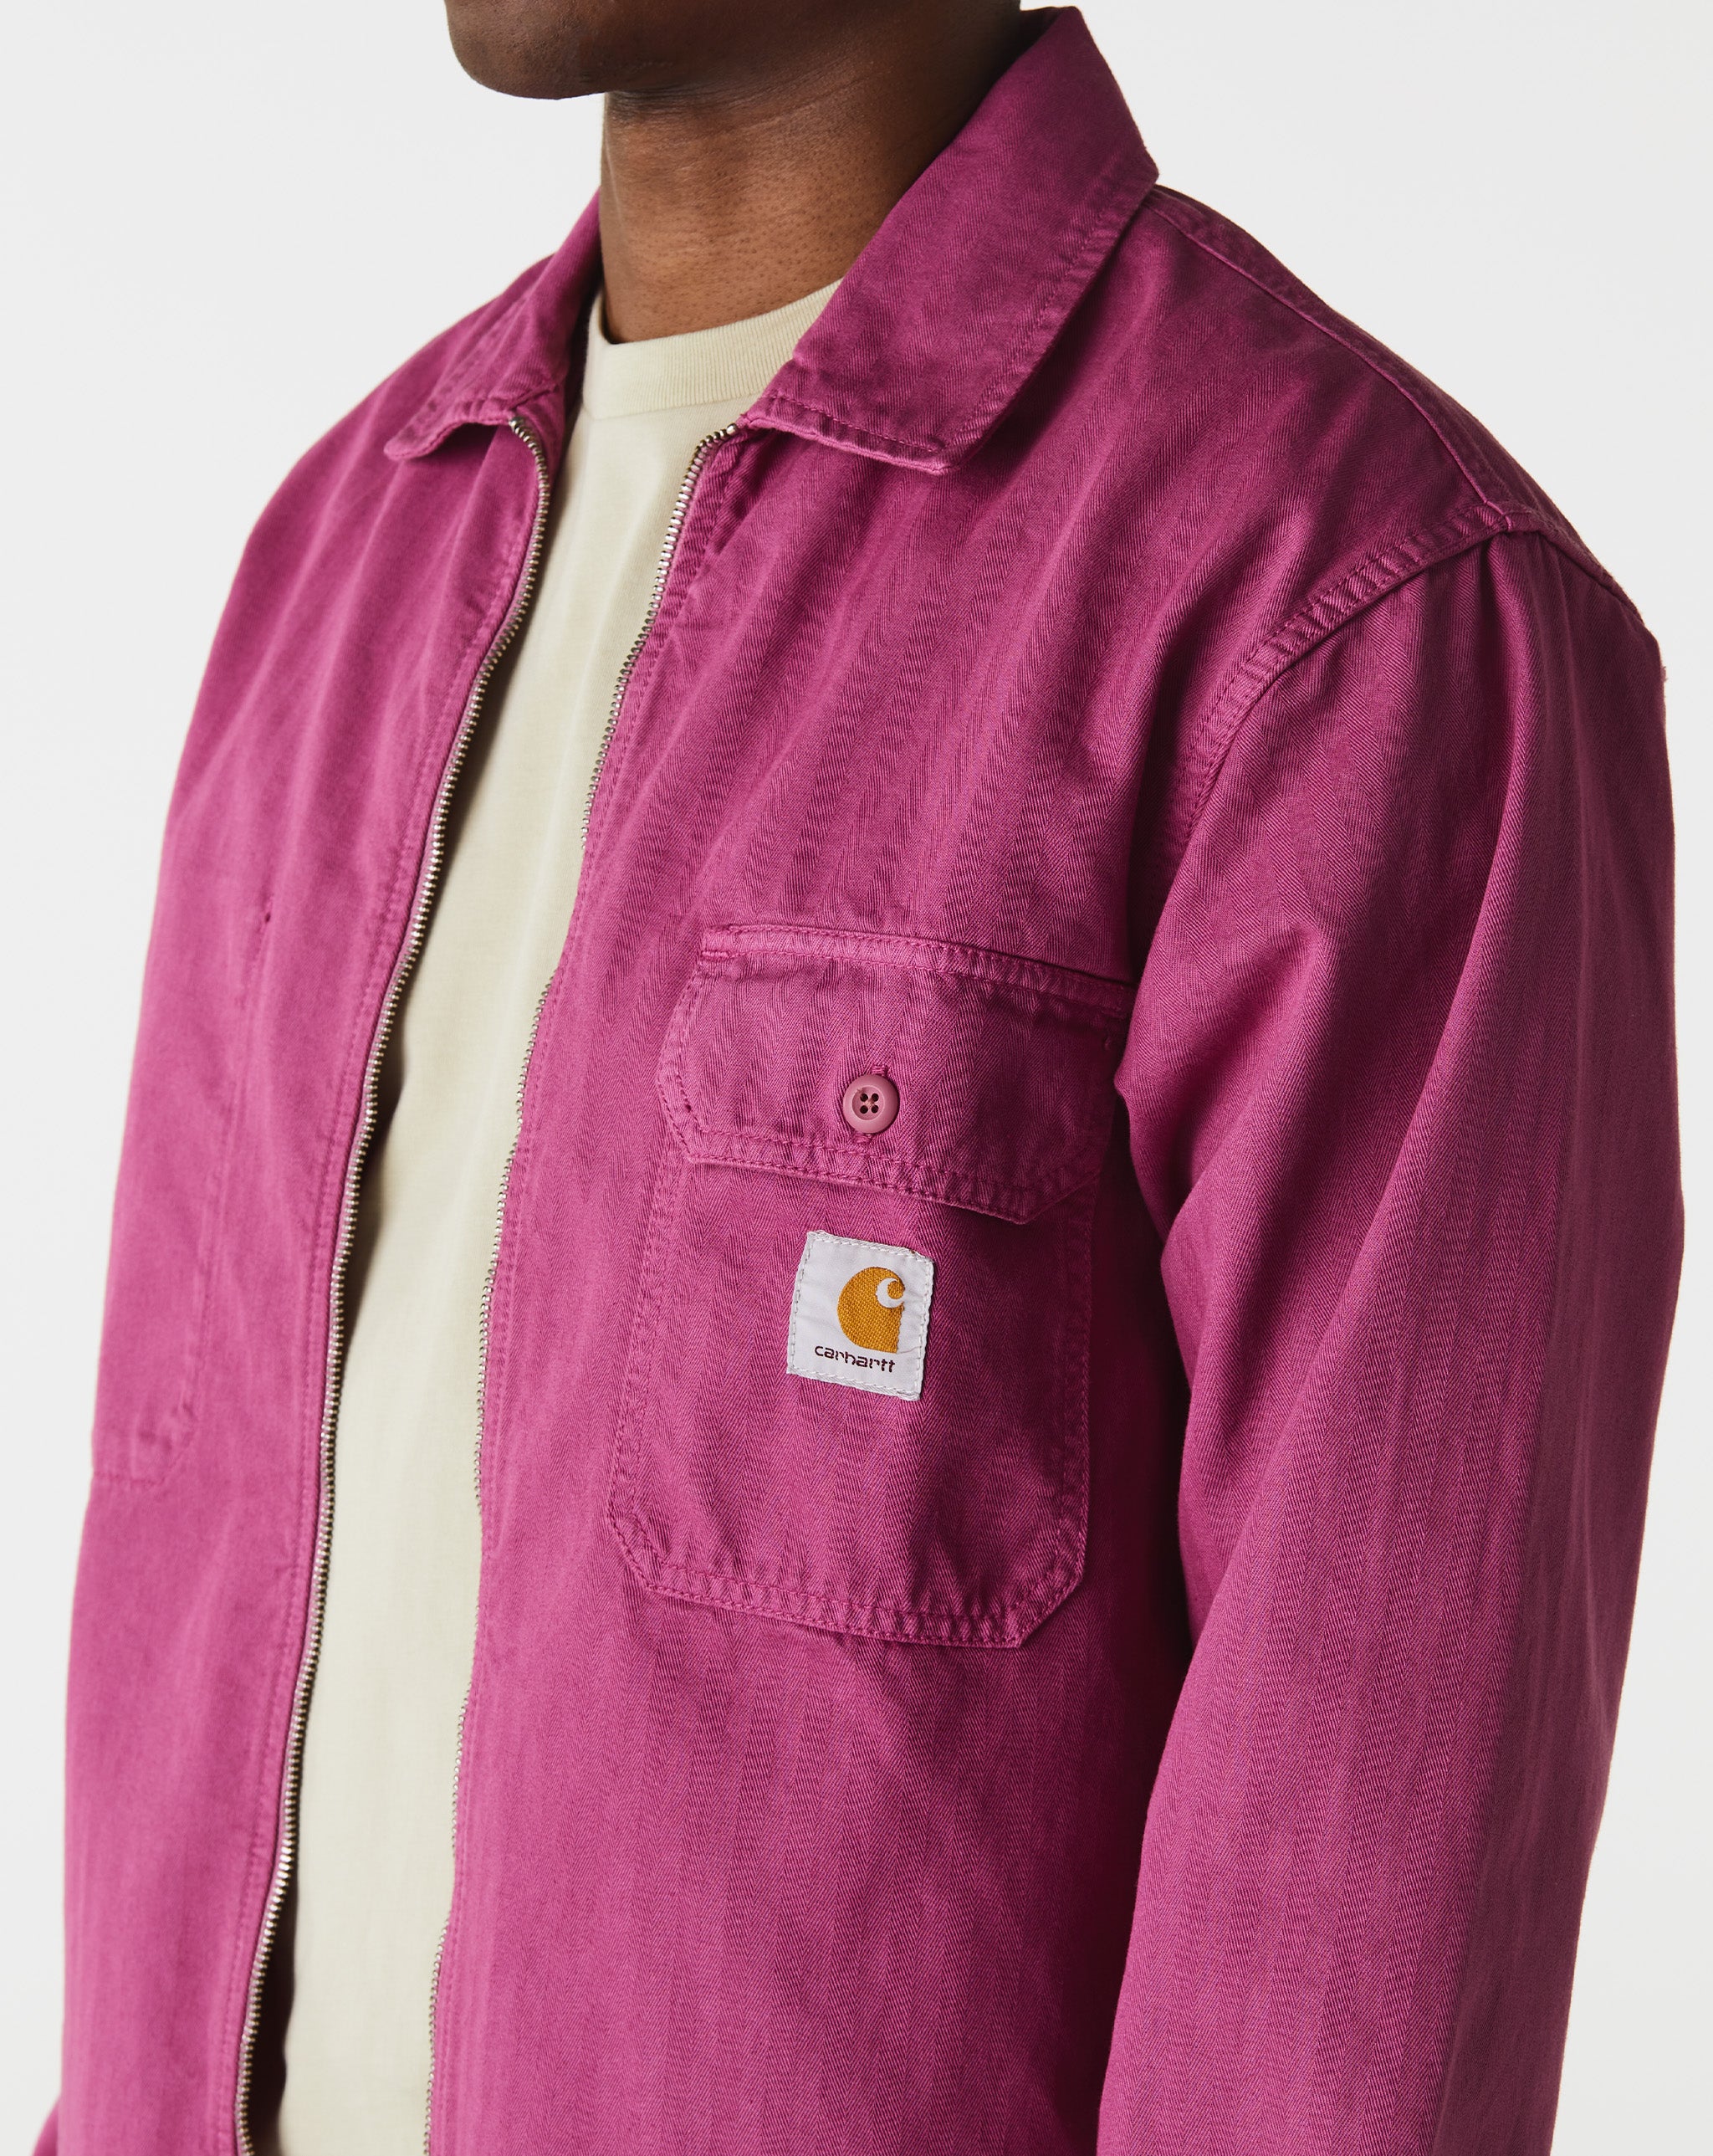 Carhartt WIP Painer Shirt Jacket  - XHIBITION